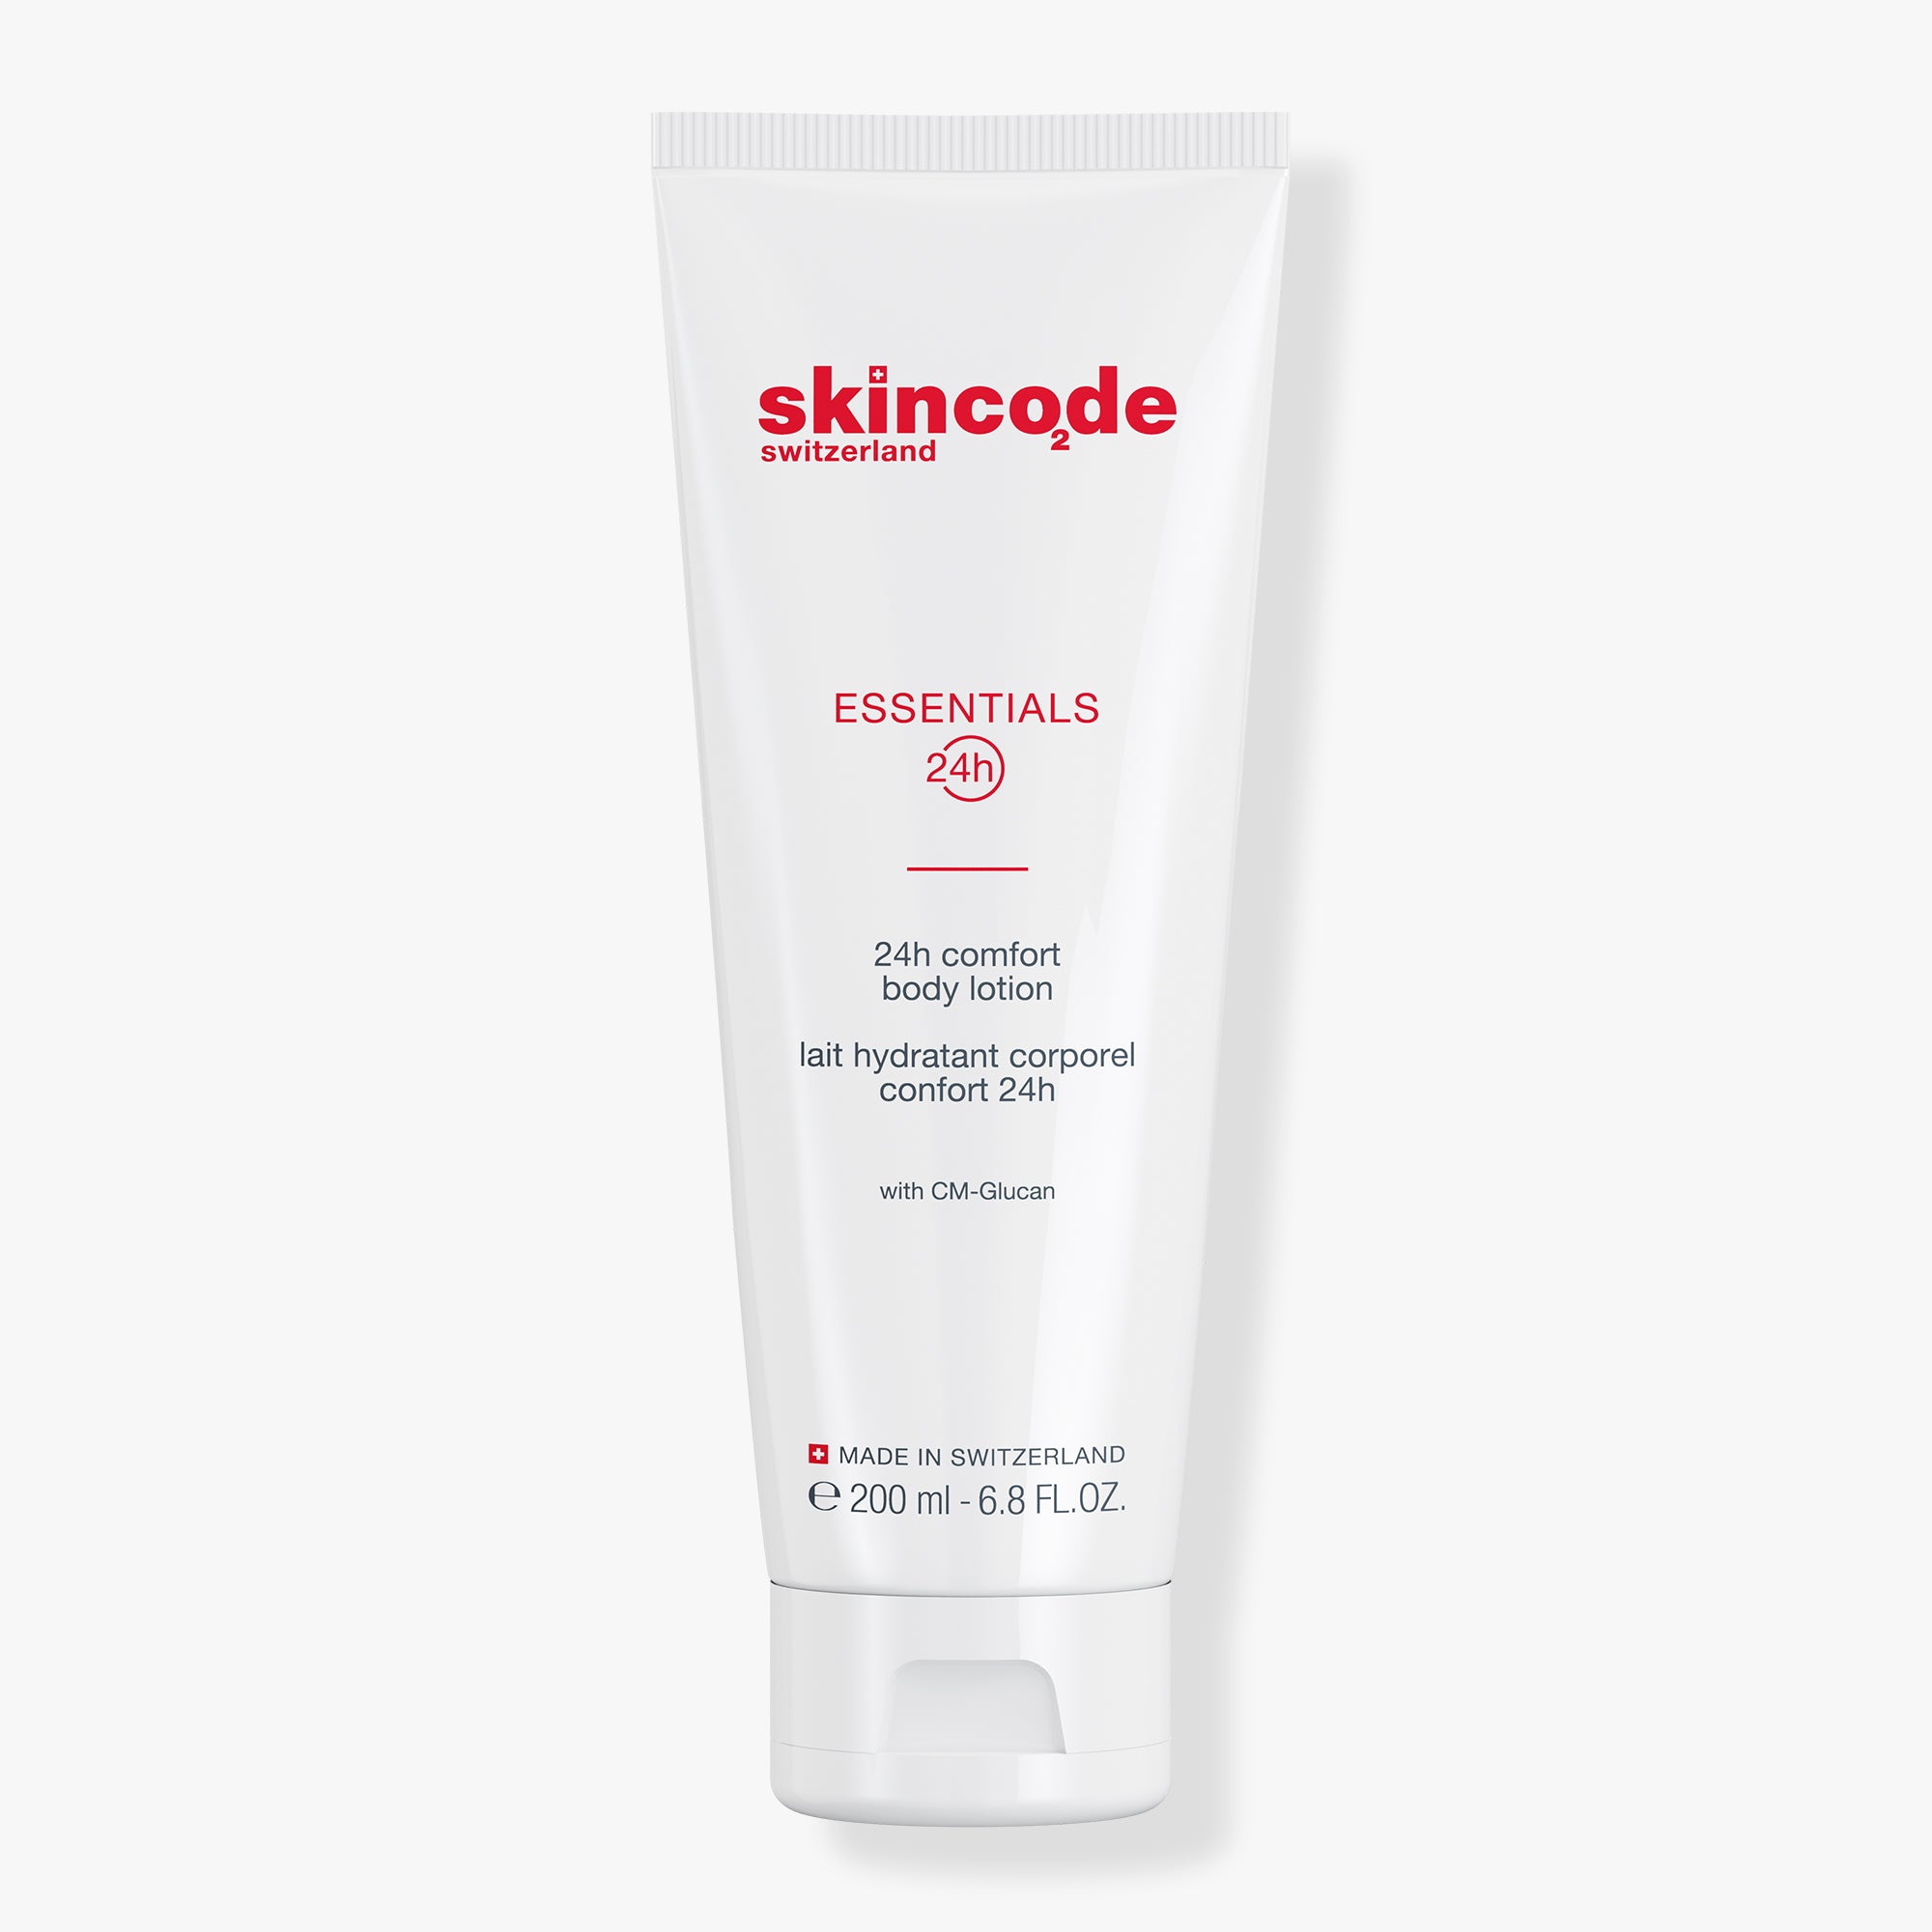 SkinCode Essentials, 24h Comfort Body Lotion